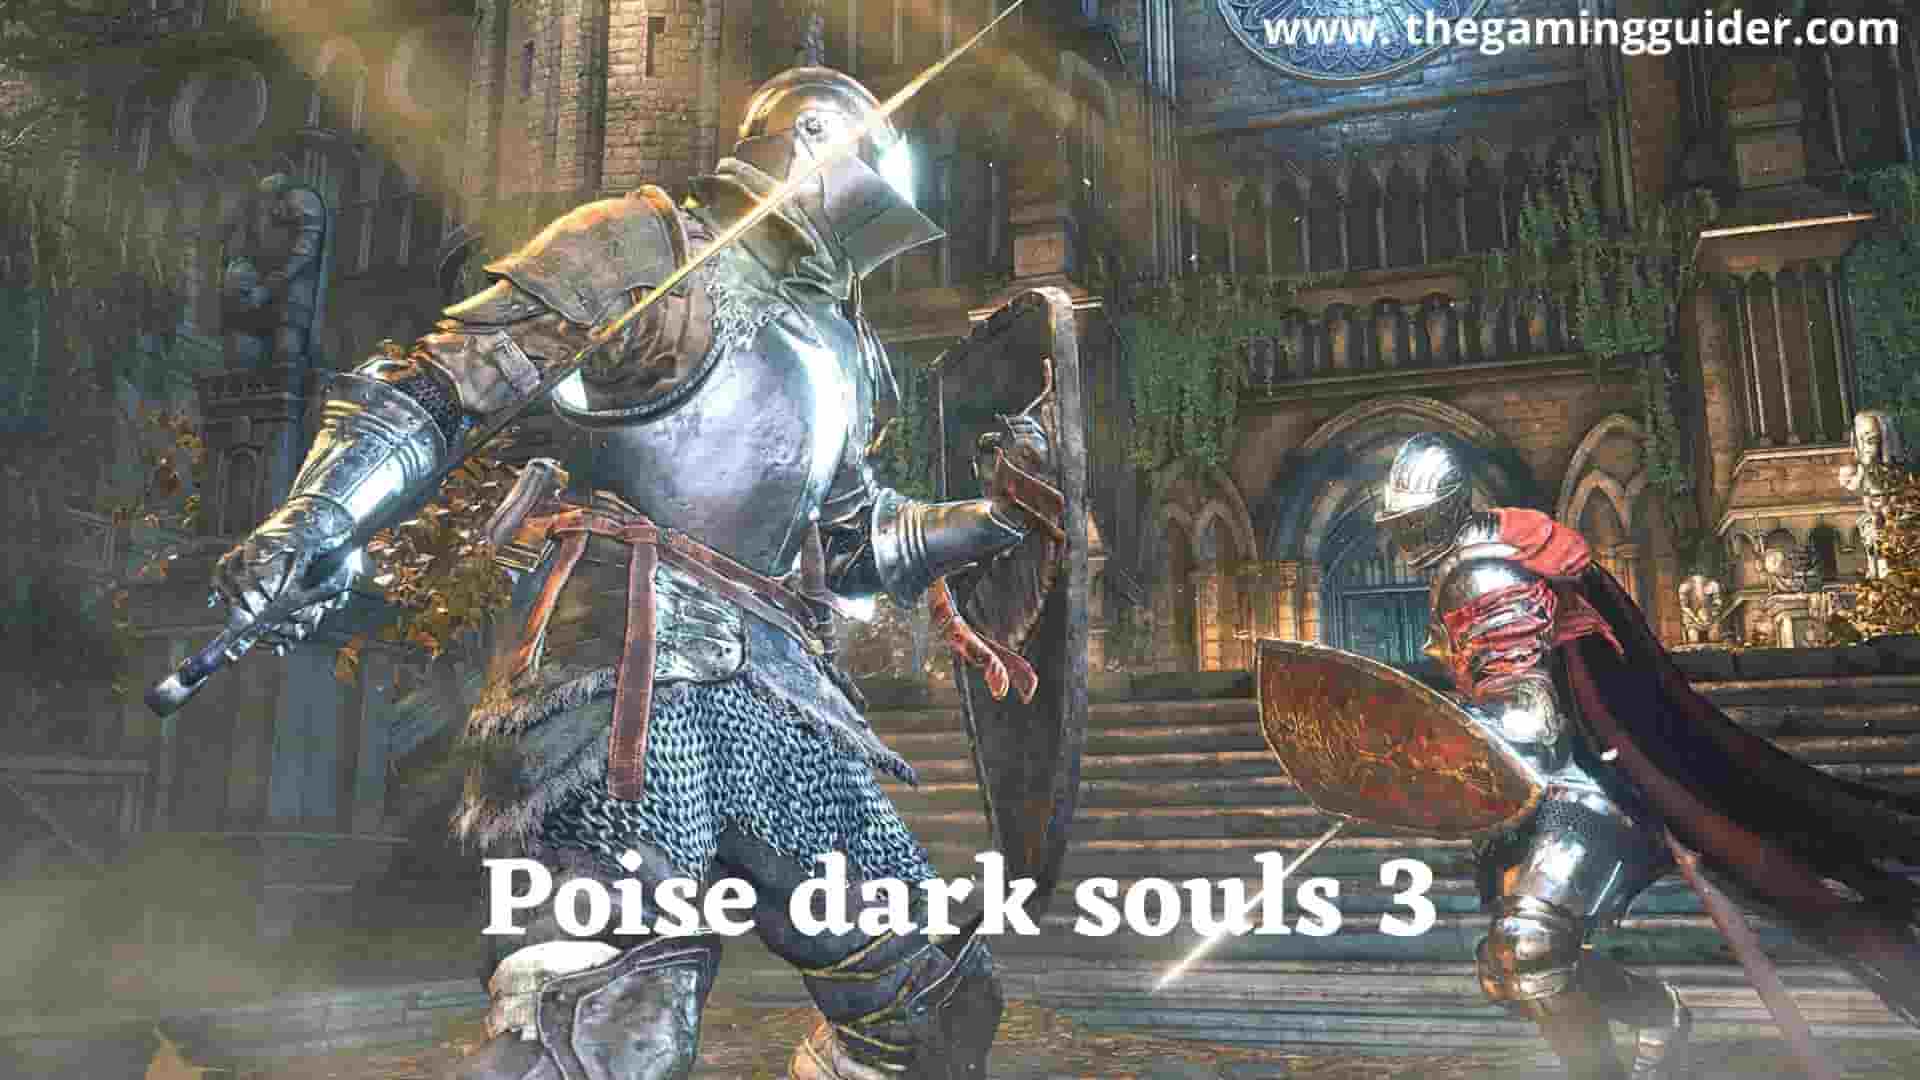 Poise dark souls 3 -thegamingguider-min (1)